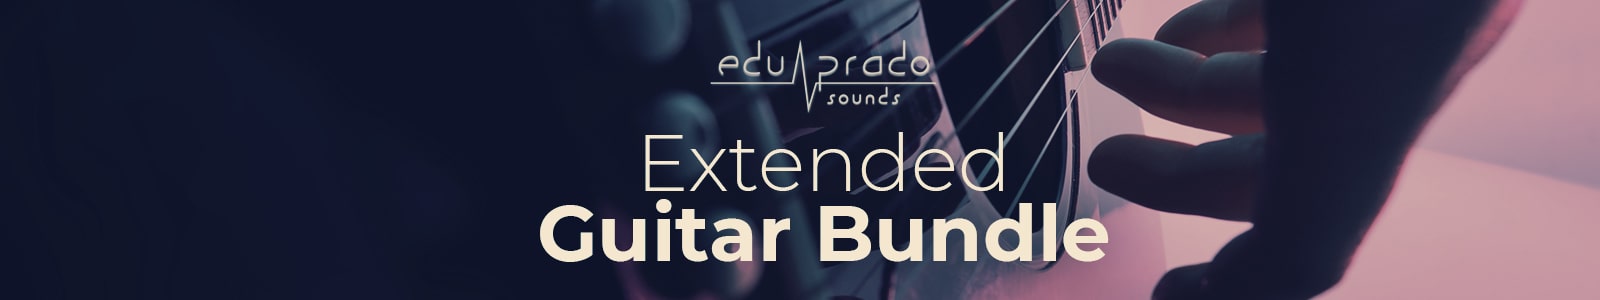 Extended Guitar Bundle by Edu Prado Sounds